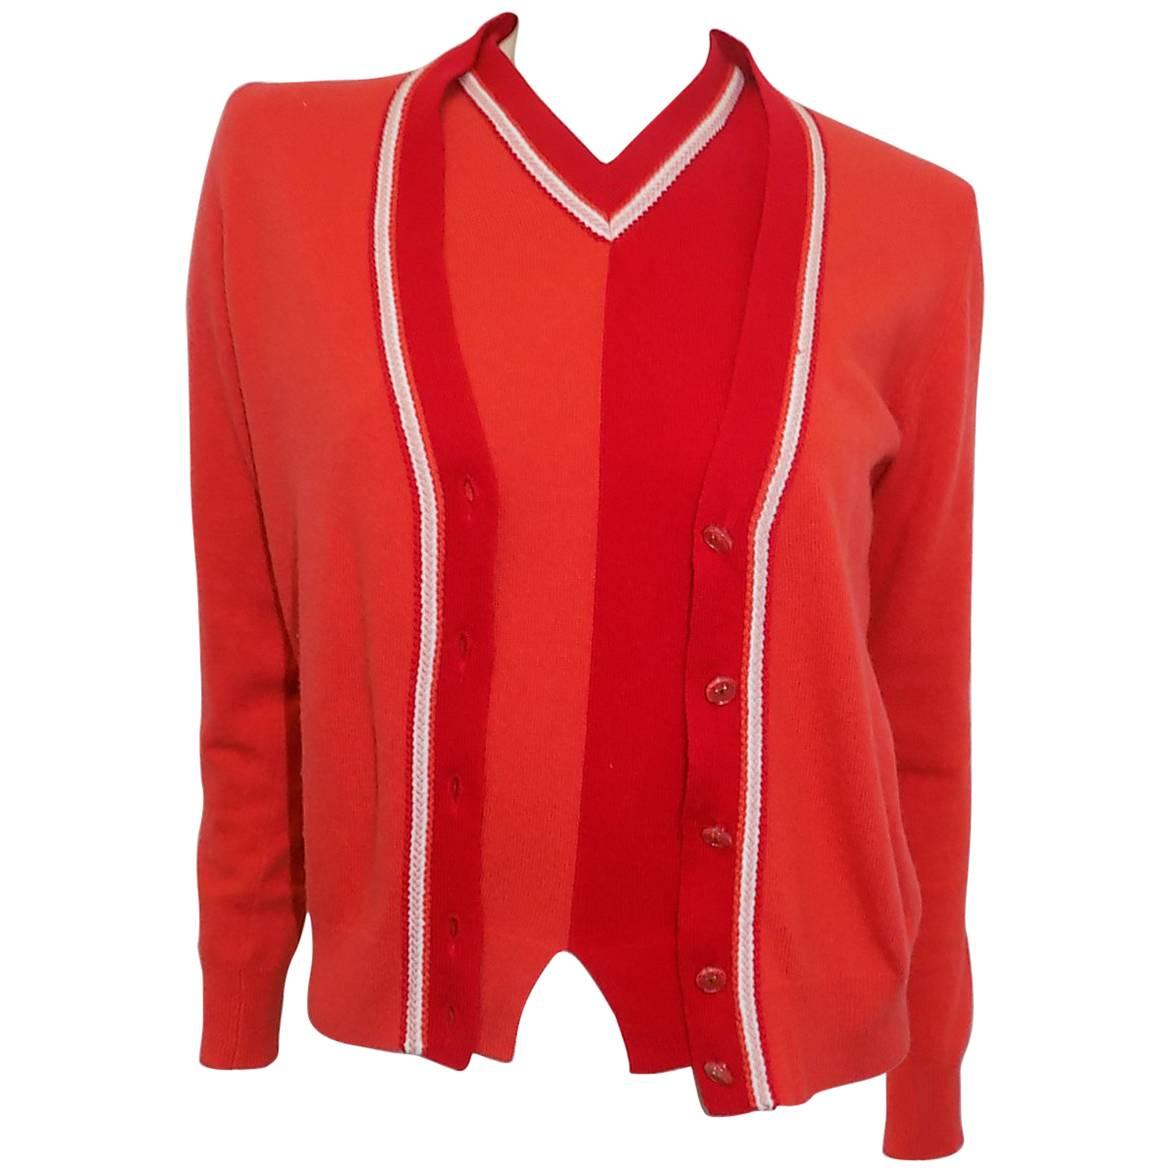 Chanel cashmere red orange 3 piece cardigan sweater set sz 40 For Sale